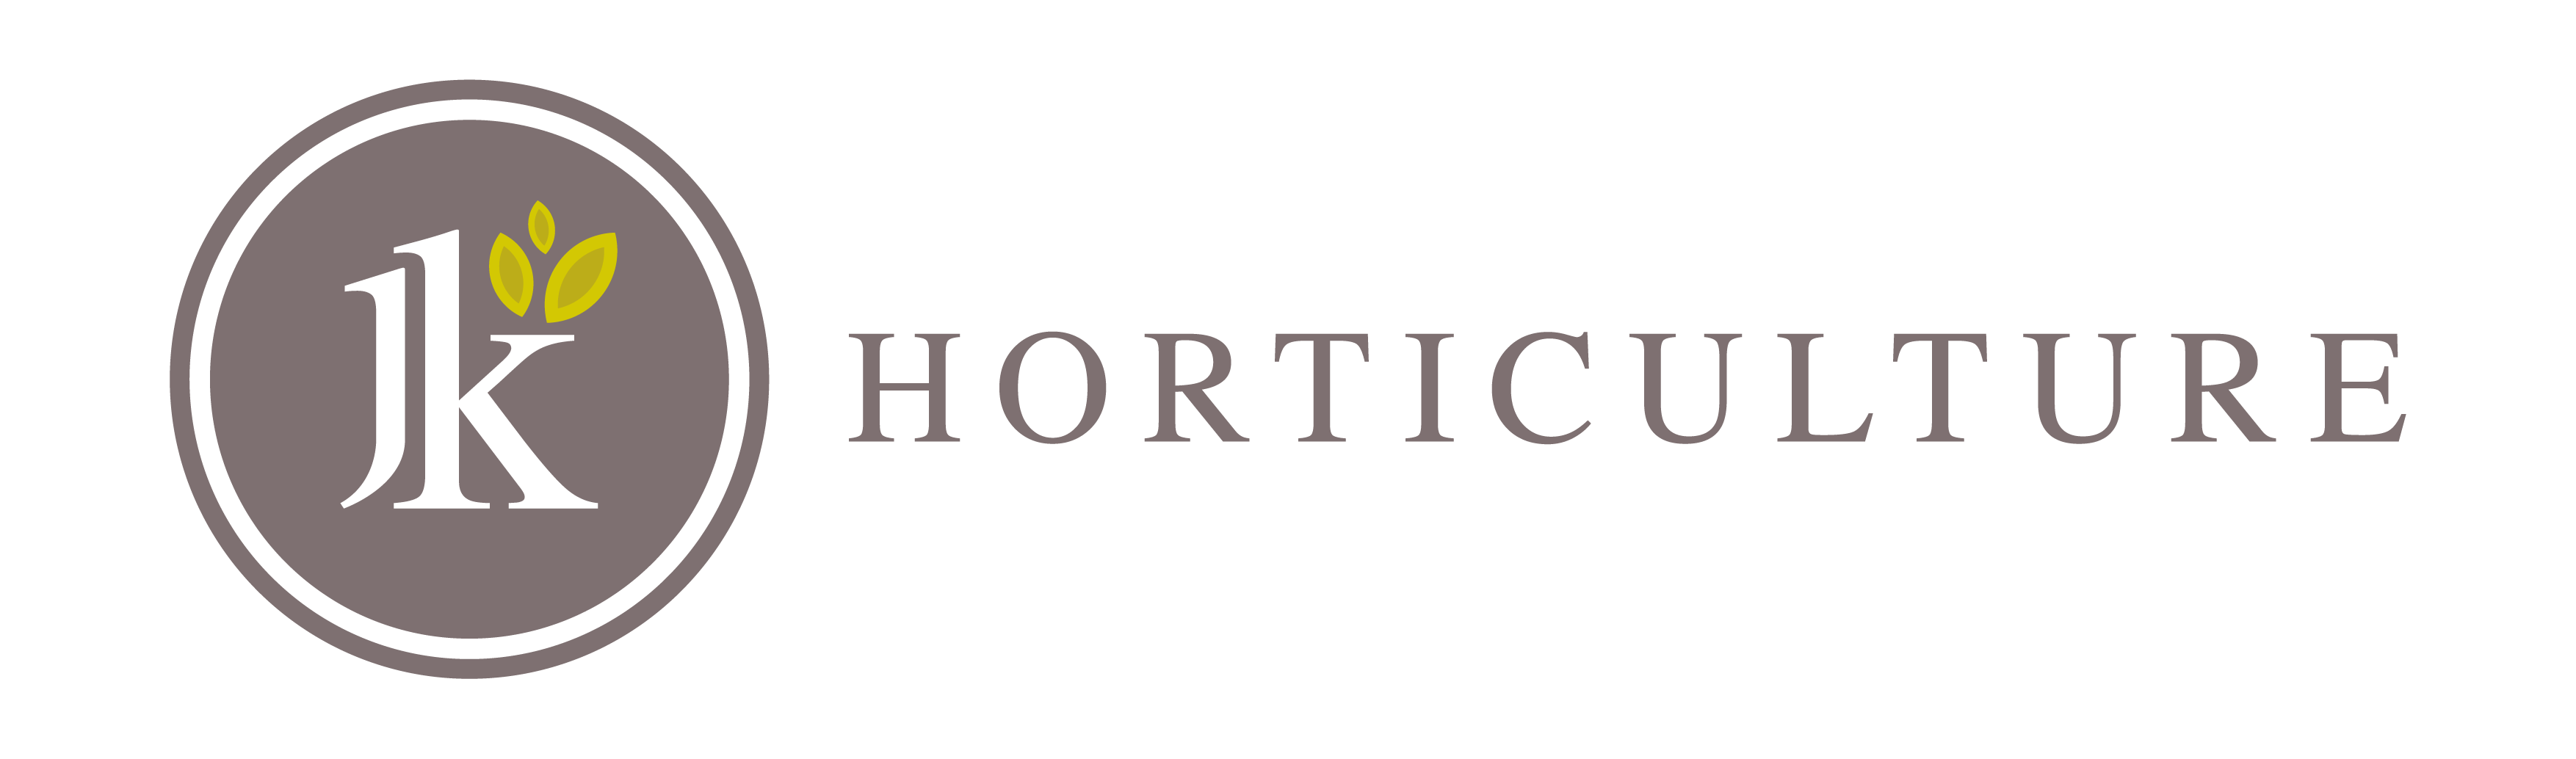 JK Horticulture Logo